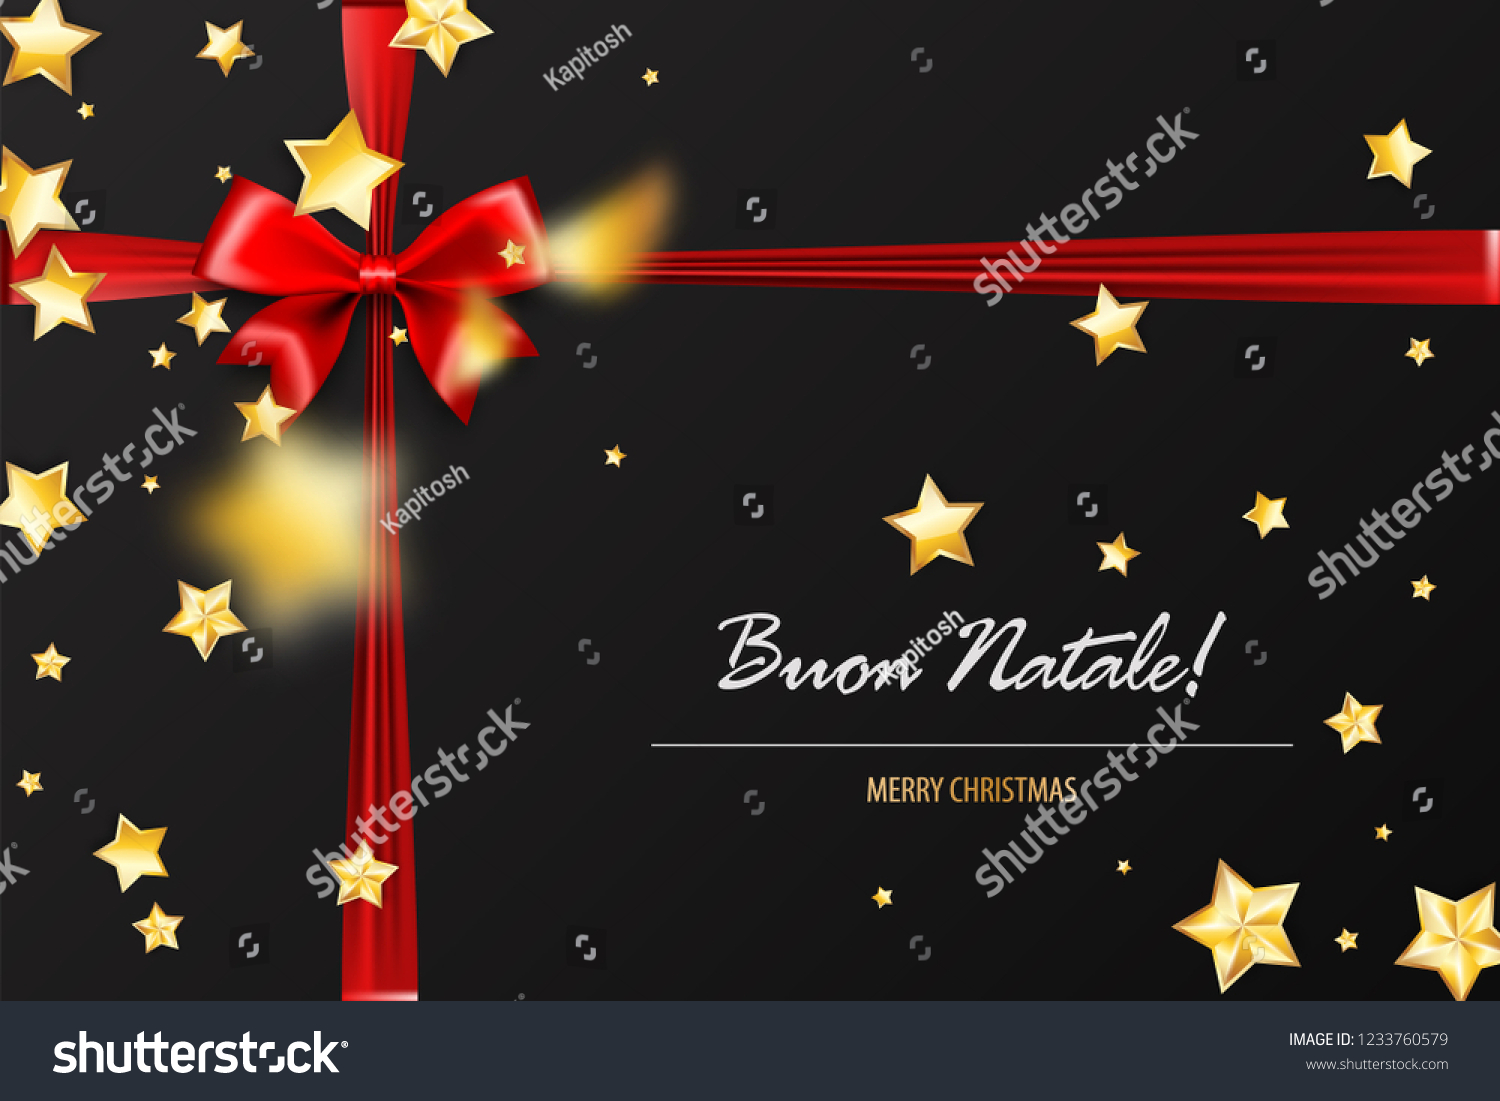 Buon Natale Greetings Italian.Buon Natale Merry Christmas Italian Greetings Stock Vector Royalty Free 1233760579